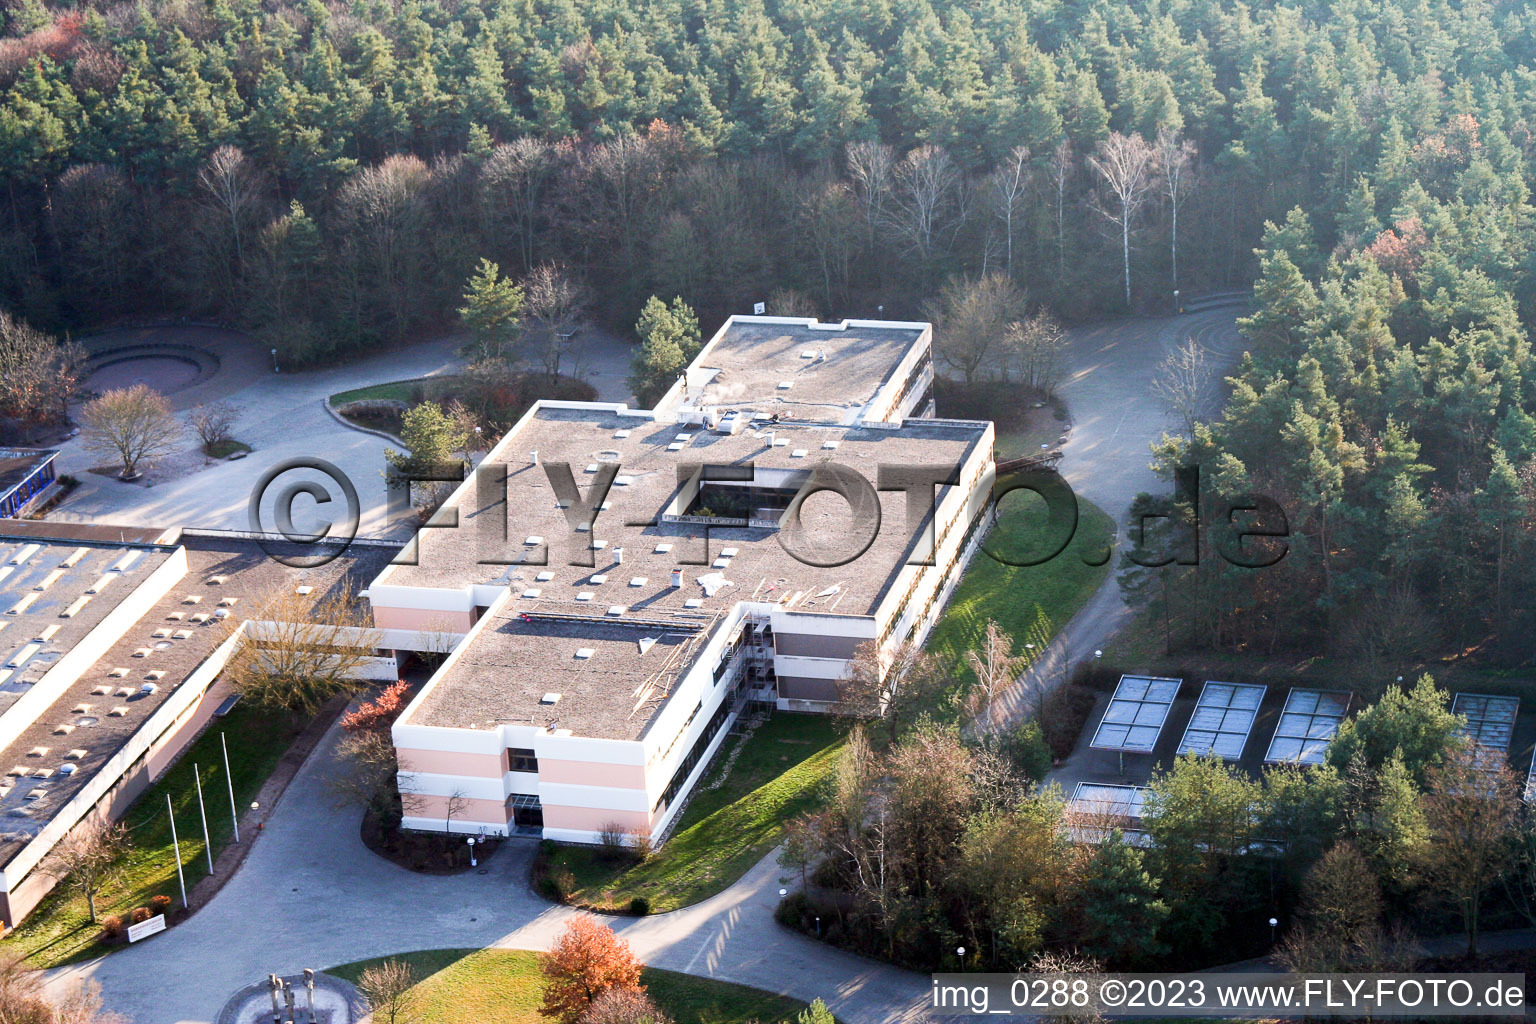 Aerial photograpy of Roman bath school in Rheinzabern in the state Rhineland-Palatinate, Germany